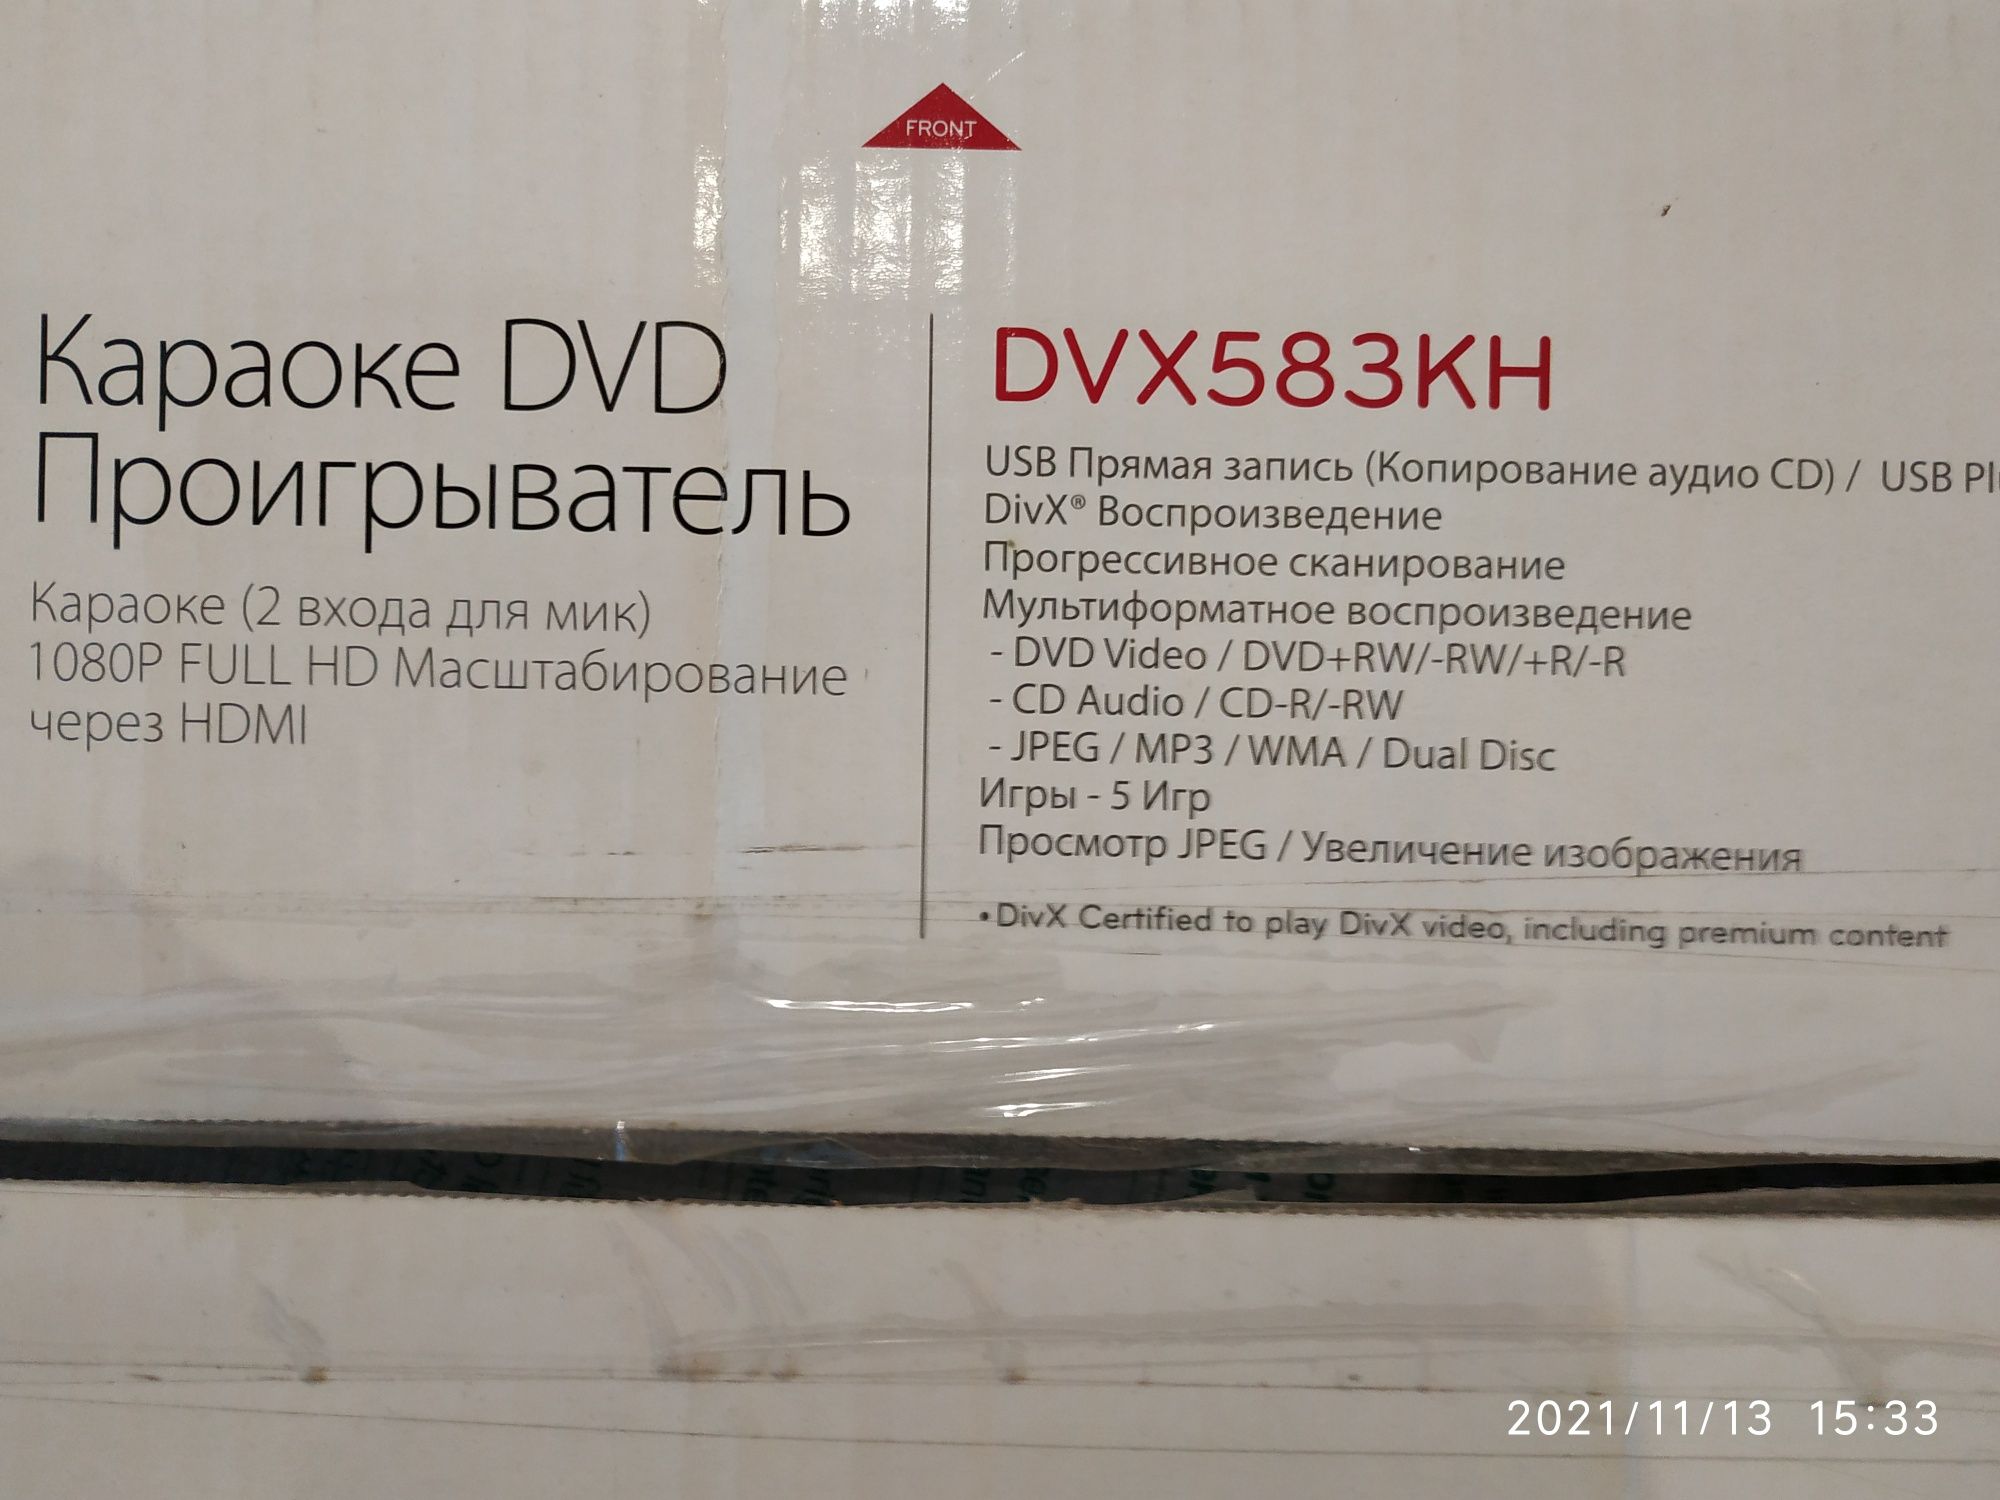 Караоке DVD видеоплеер LG DVX-583 KH,новый.